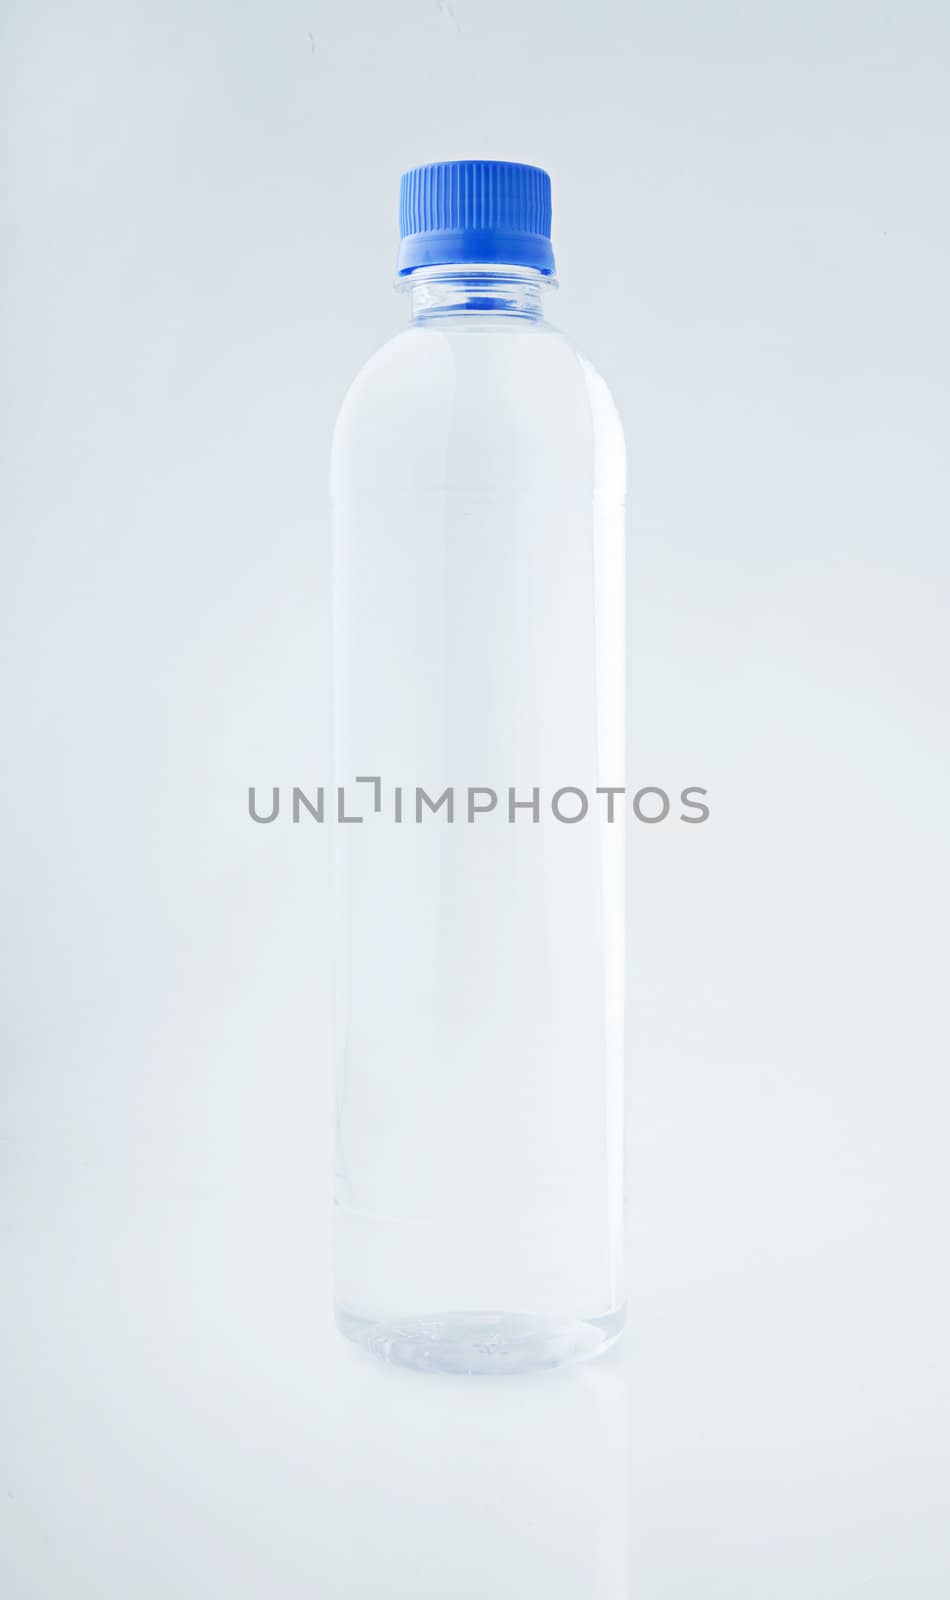 Water bottle shot in studio on neutral background